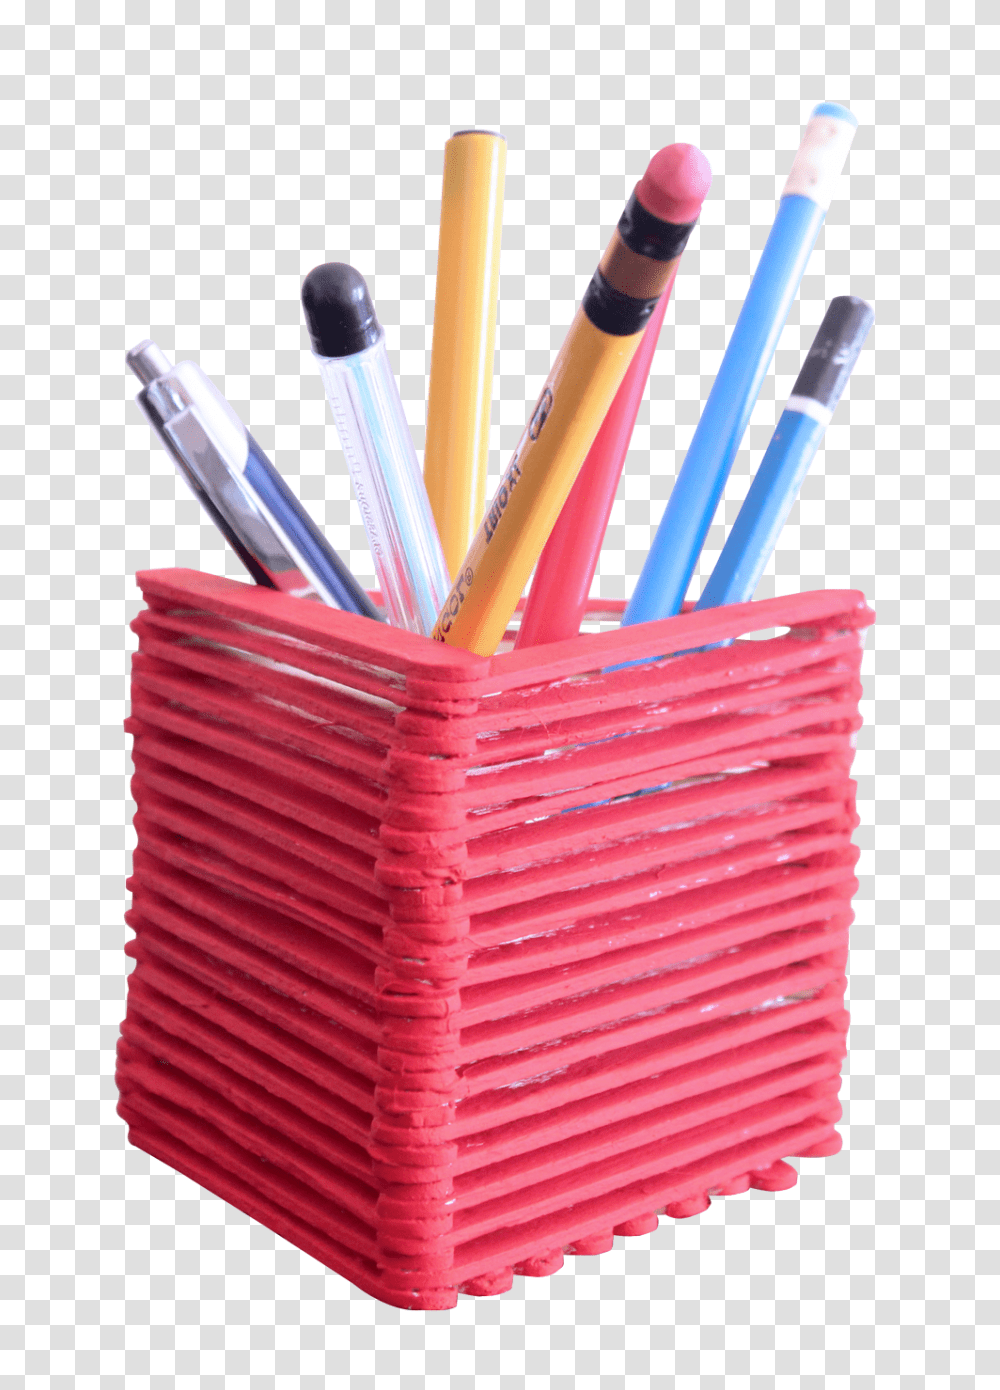 Pen Stand Image, Brush, Tool, Basket, Toothbrush Transparent Png